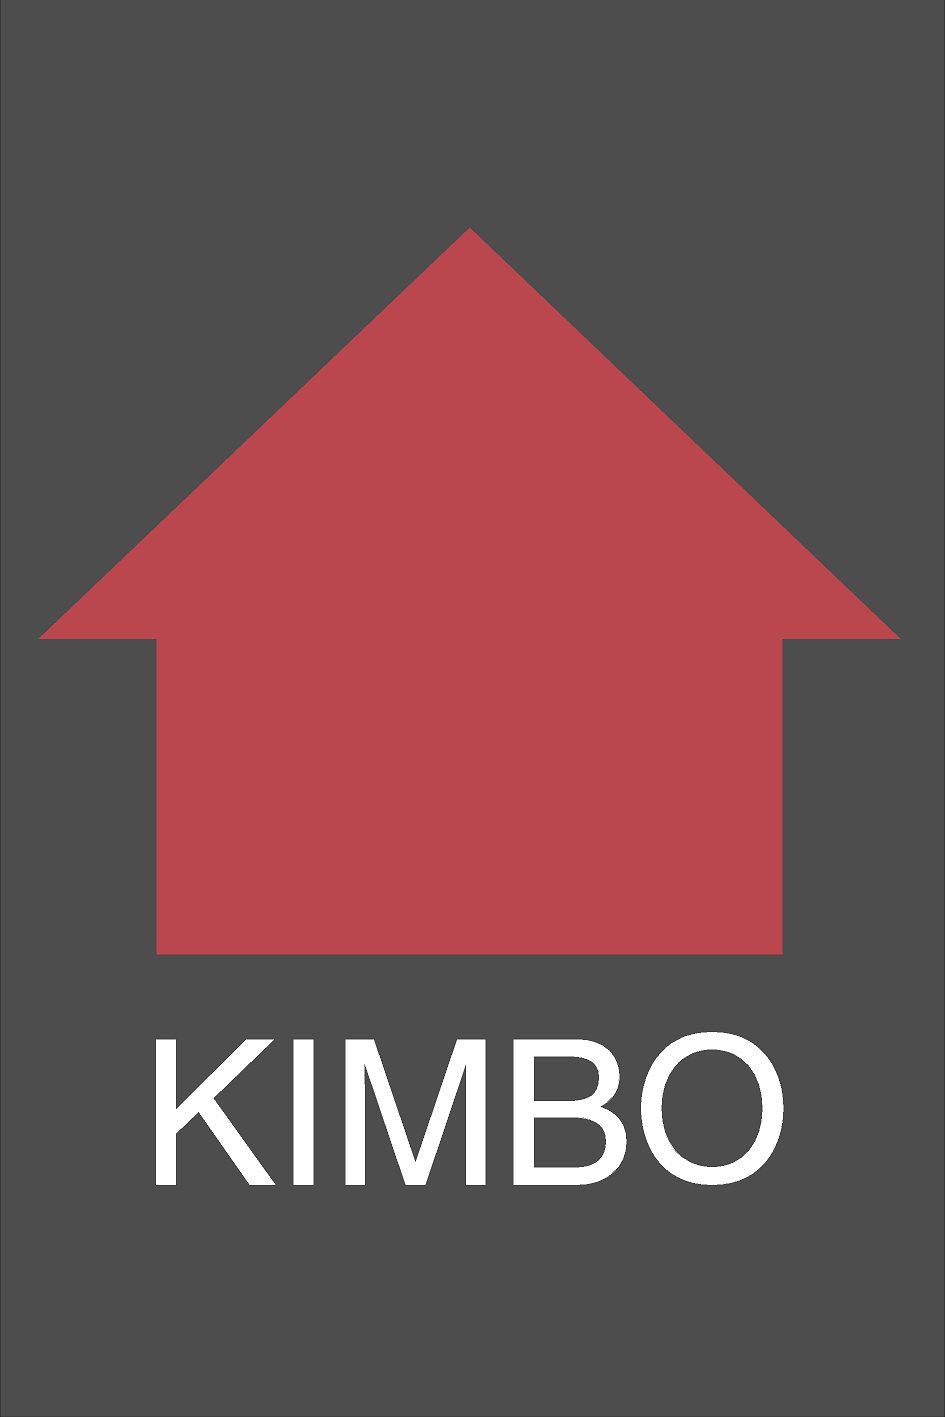 Kimbo Huse / Byggeri & entreprise Nordjylland